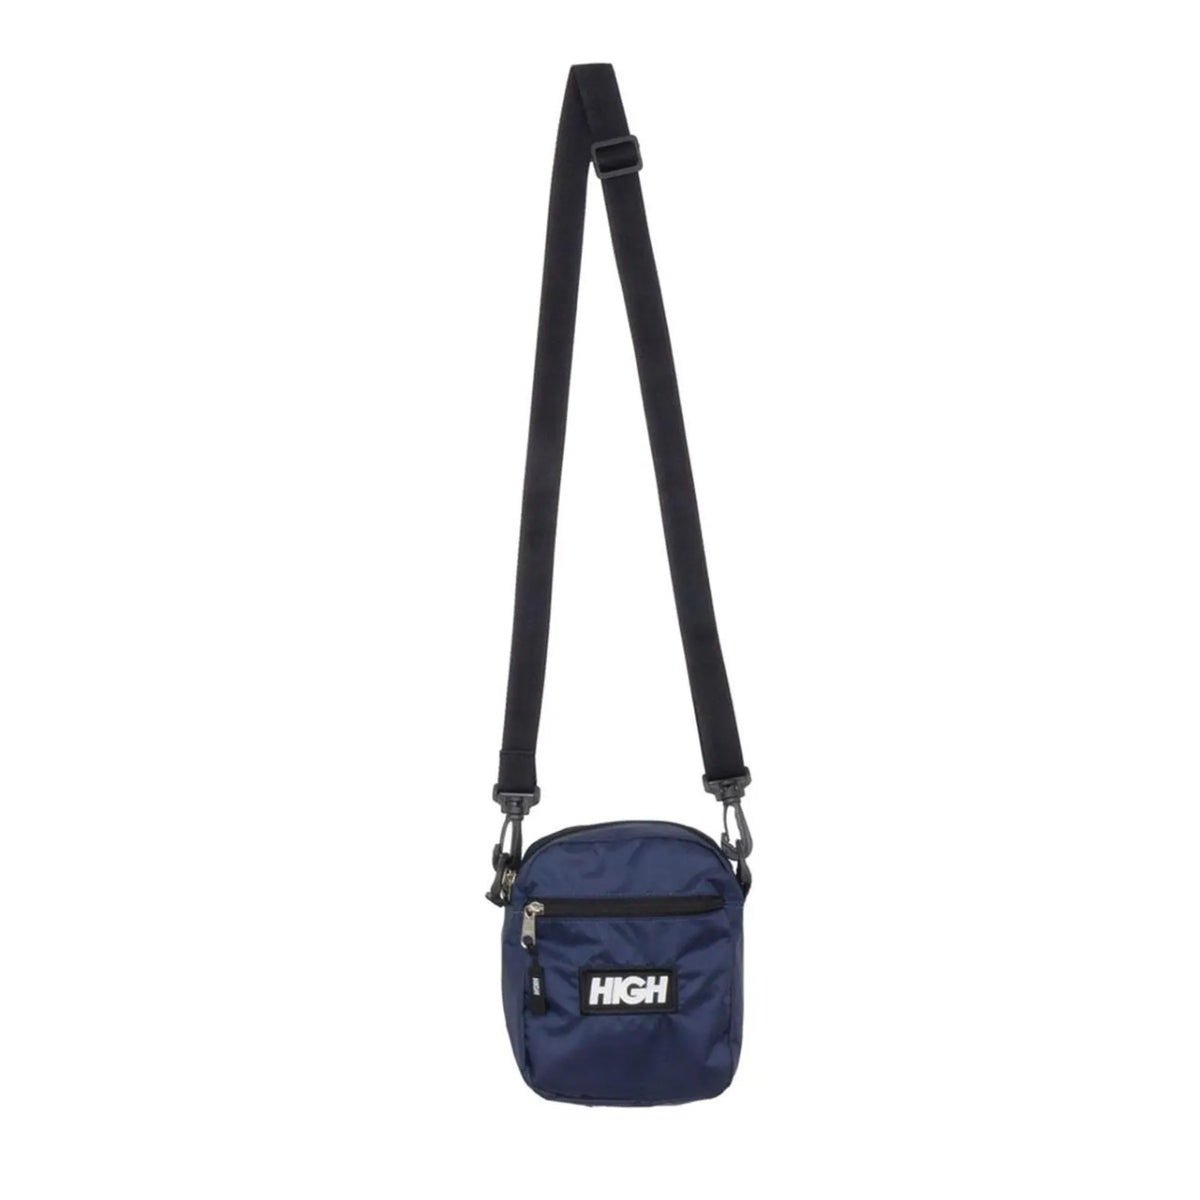 Shoulder Bag High "Reversible" Azul marinho/Cinza